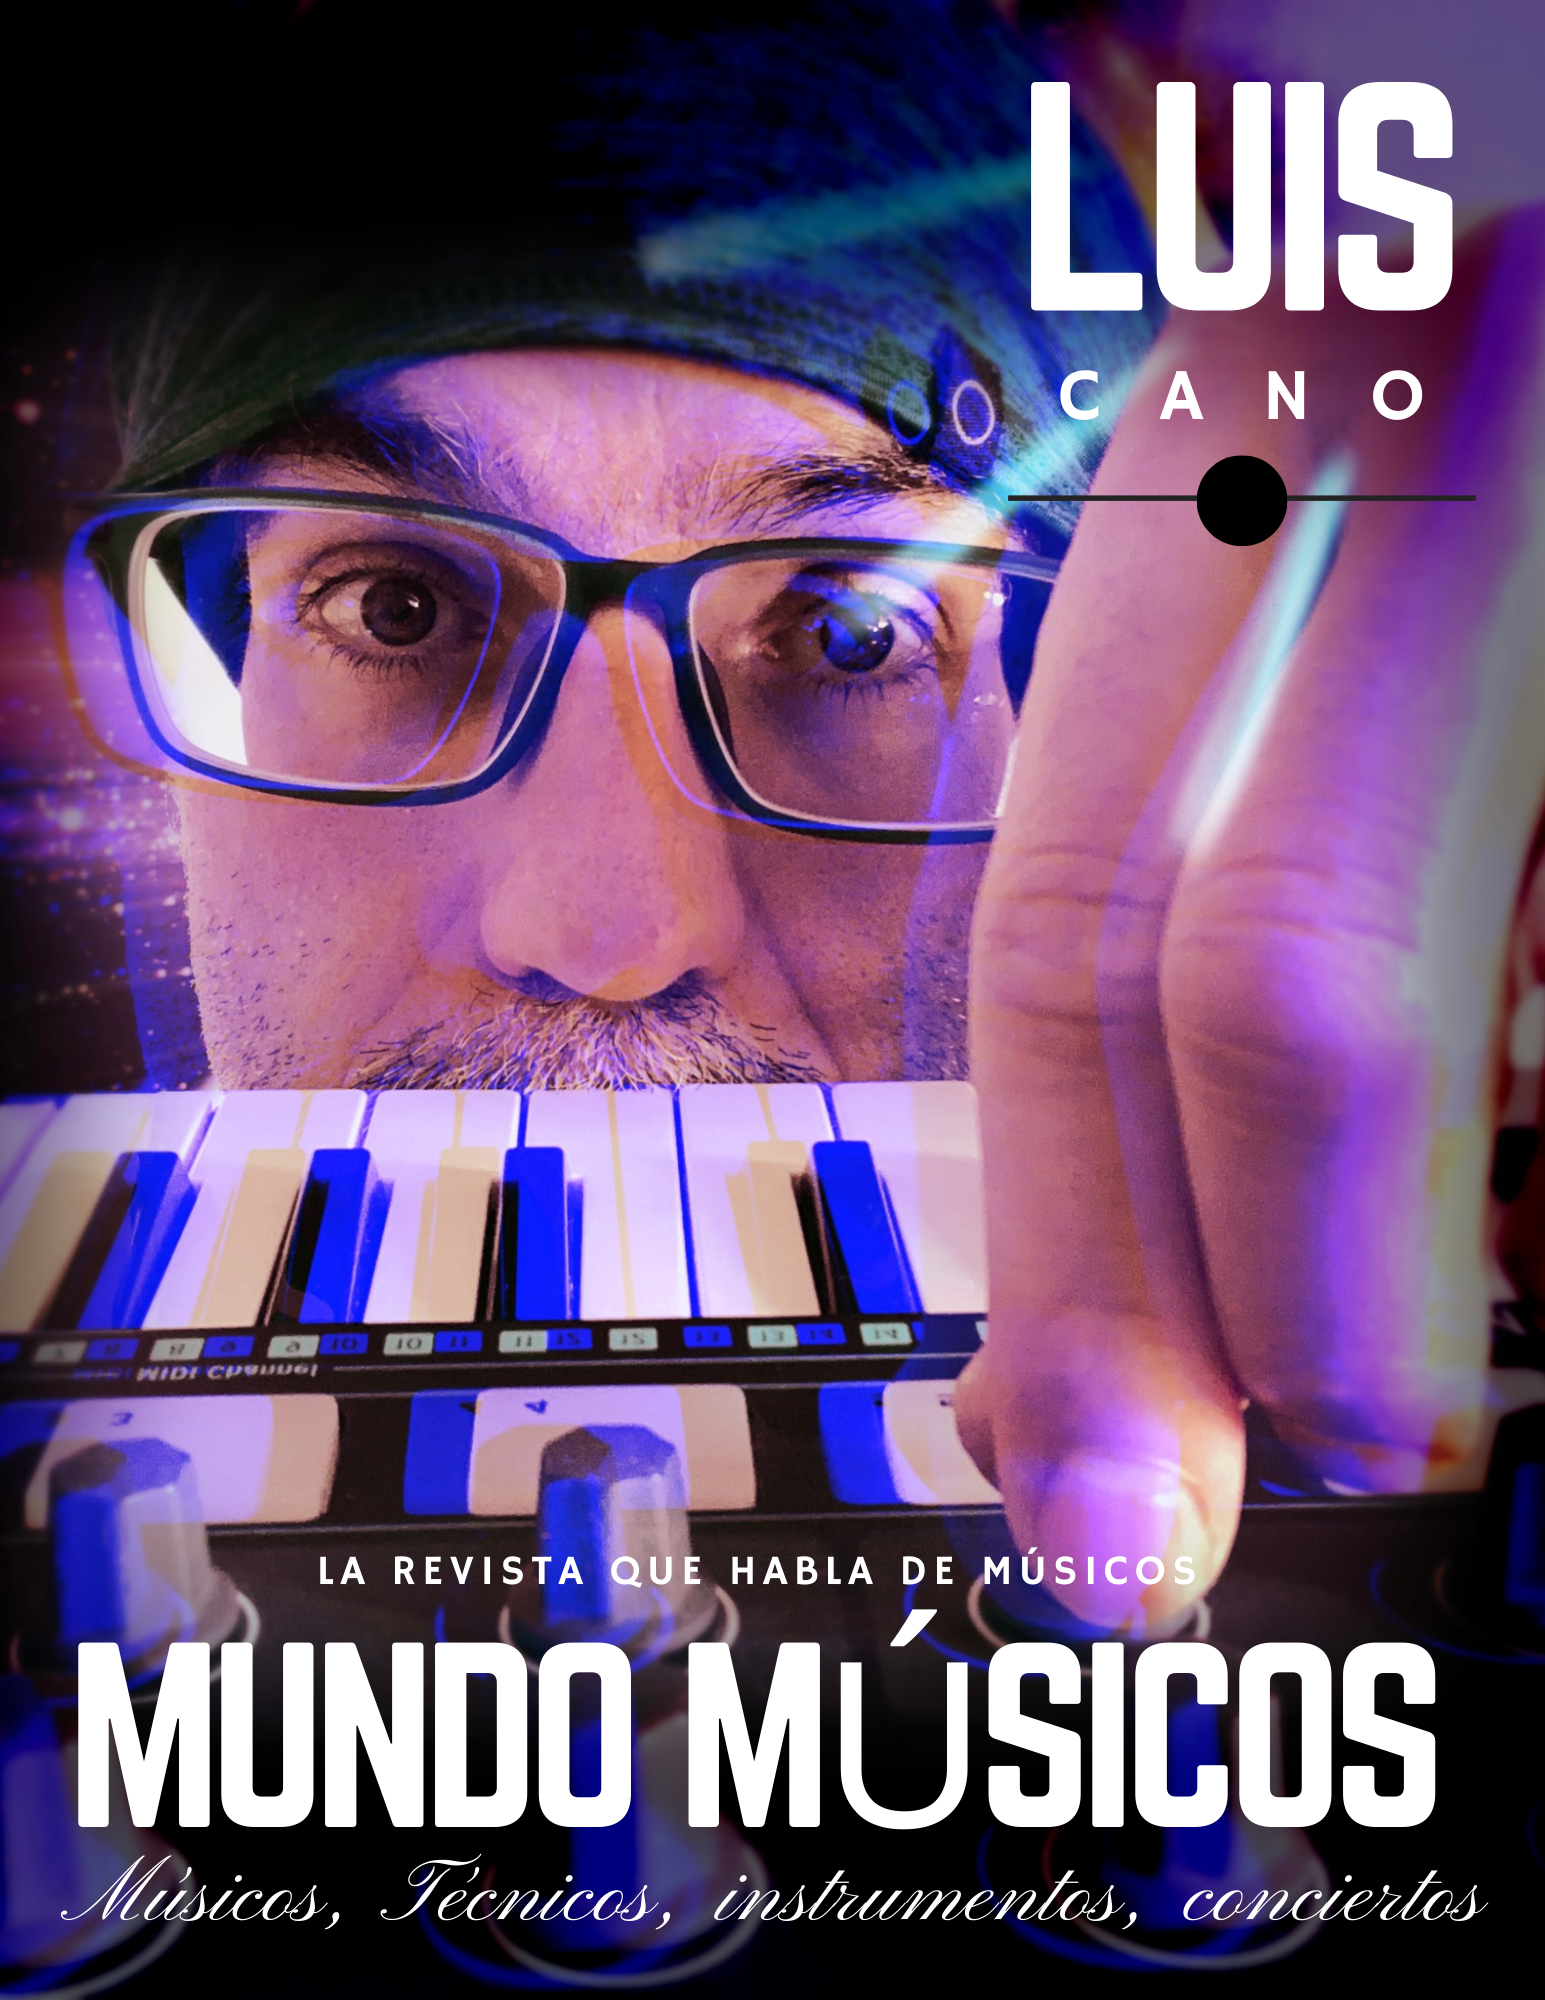 Luis Cano musico productor